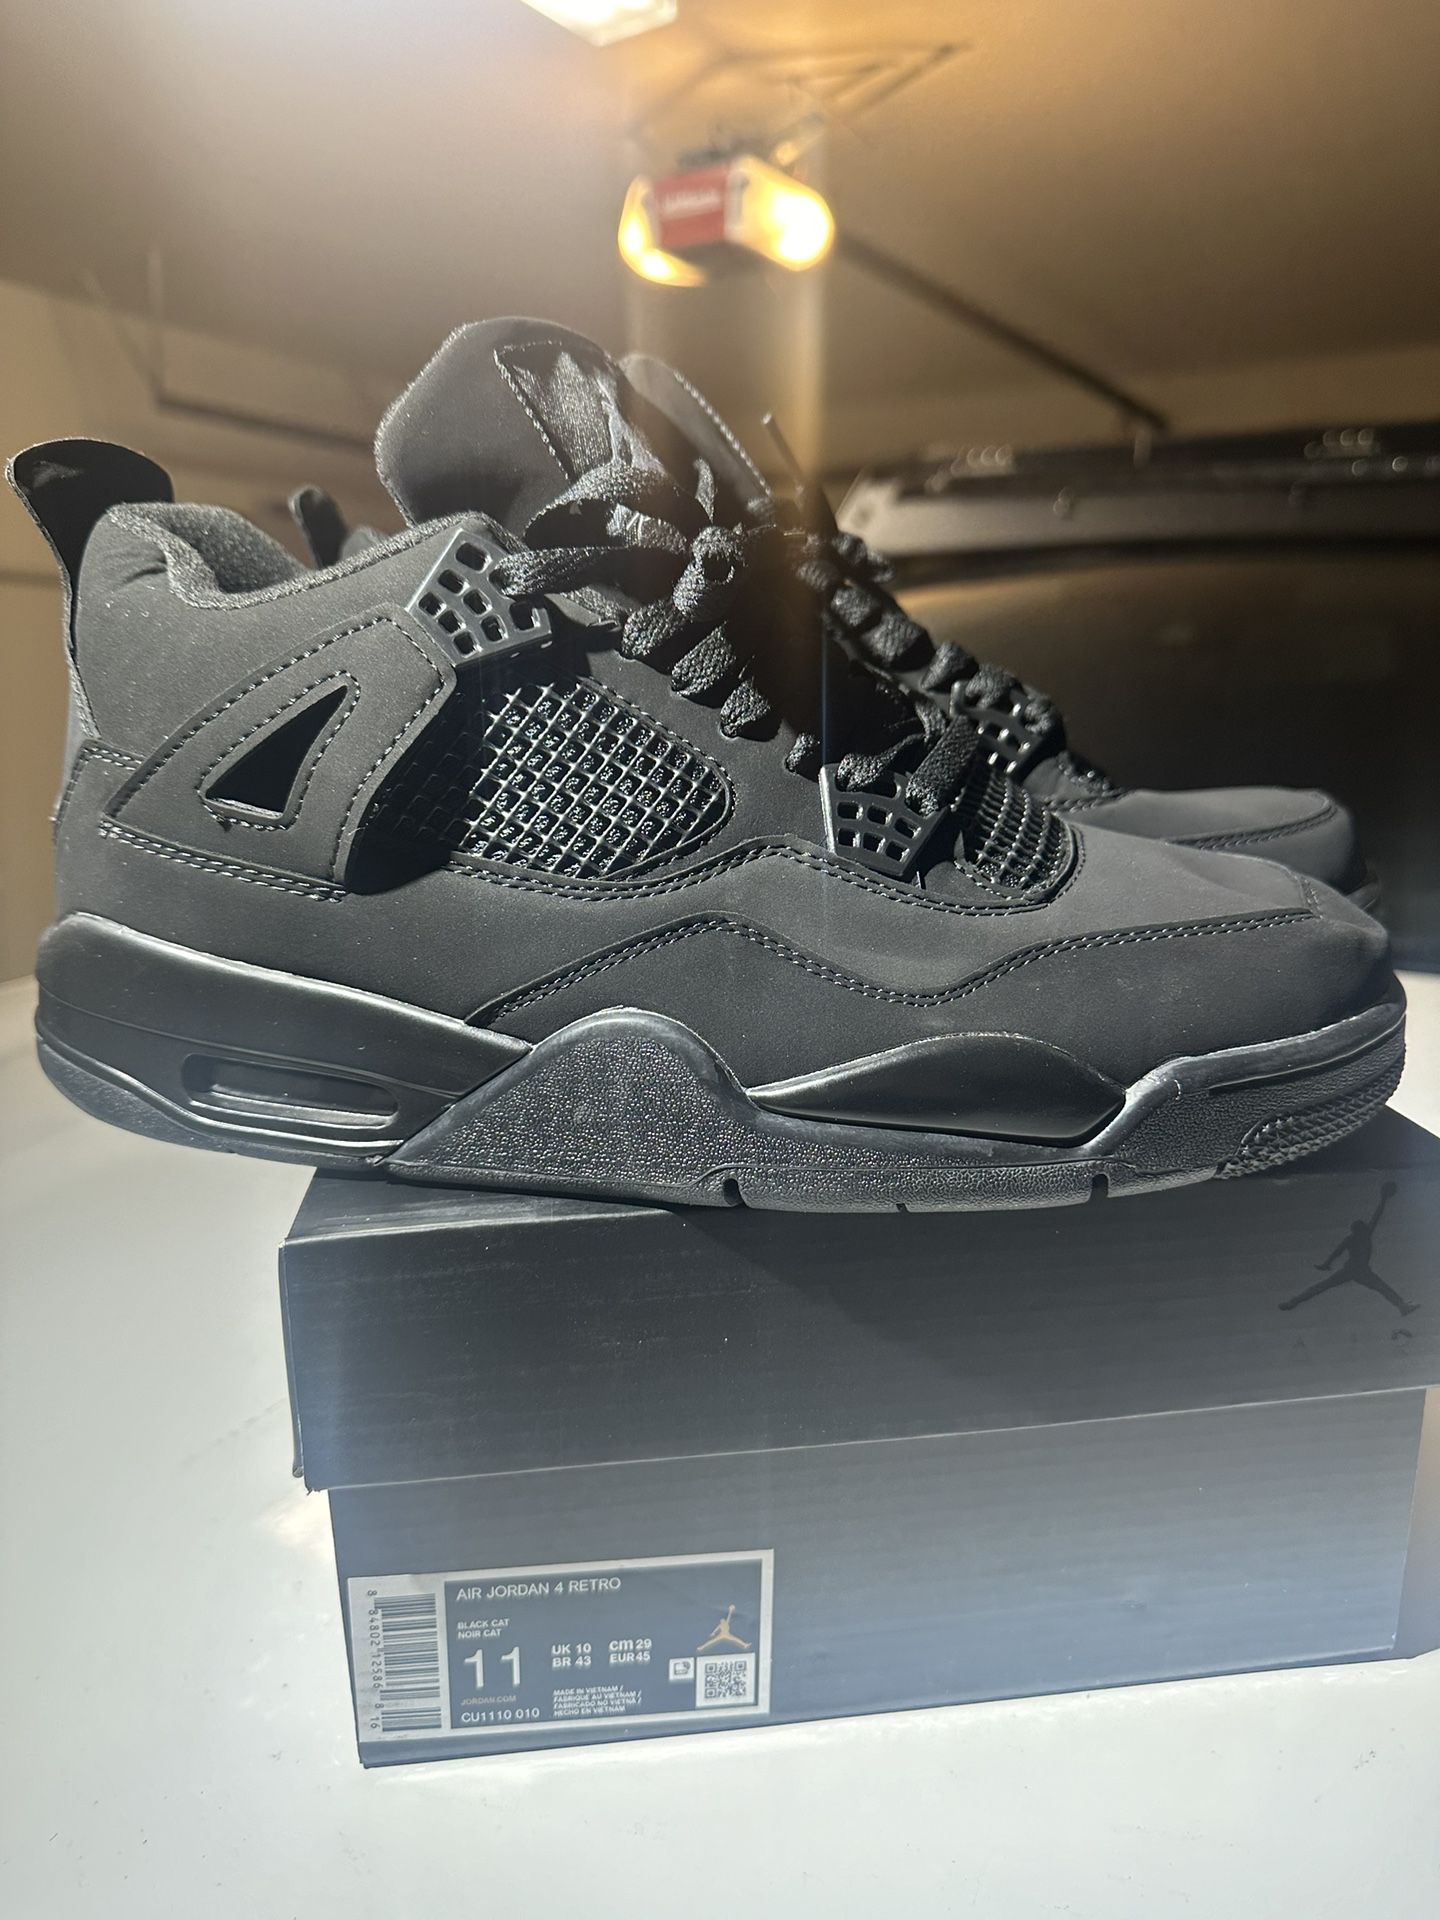 Nike Air Jordan 4 Retro BLACK CAT Shoes Men's BRAND NEW